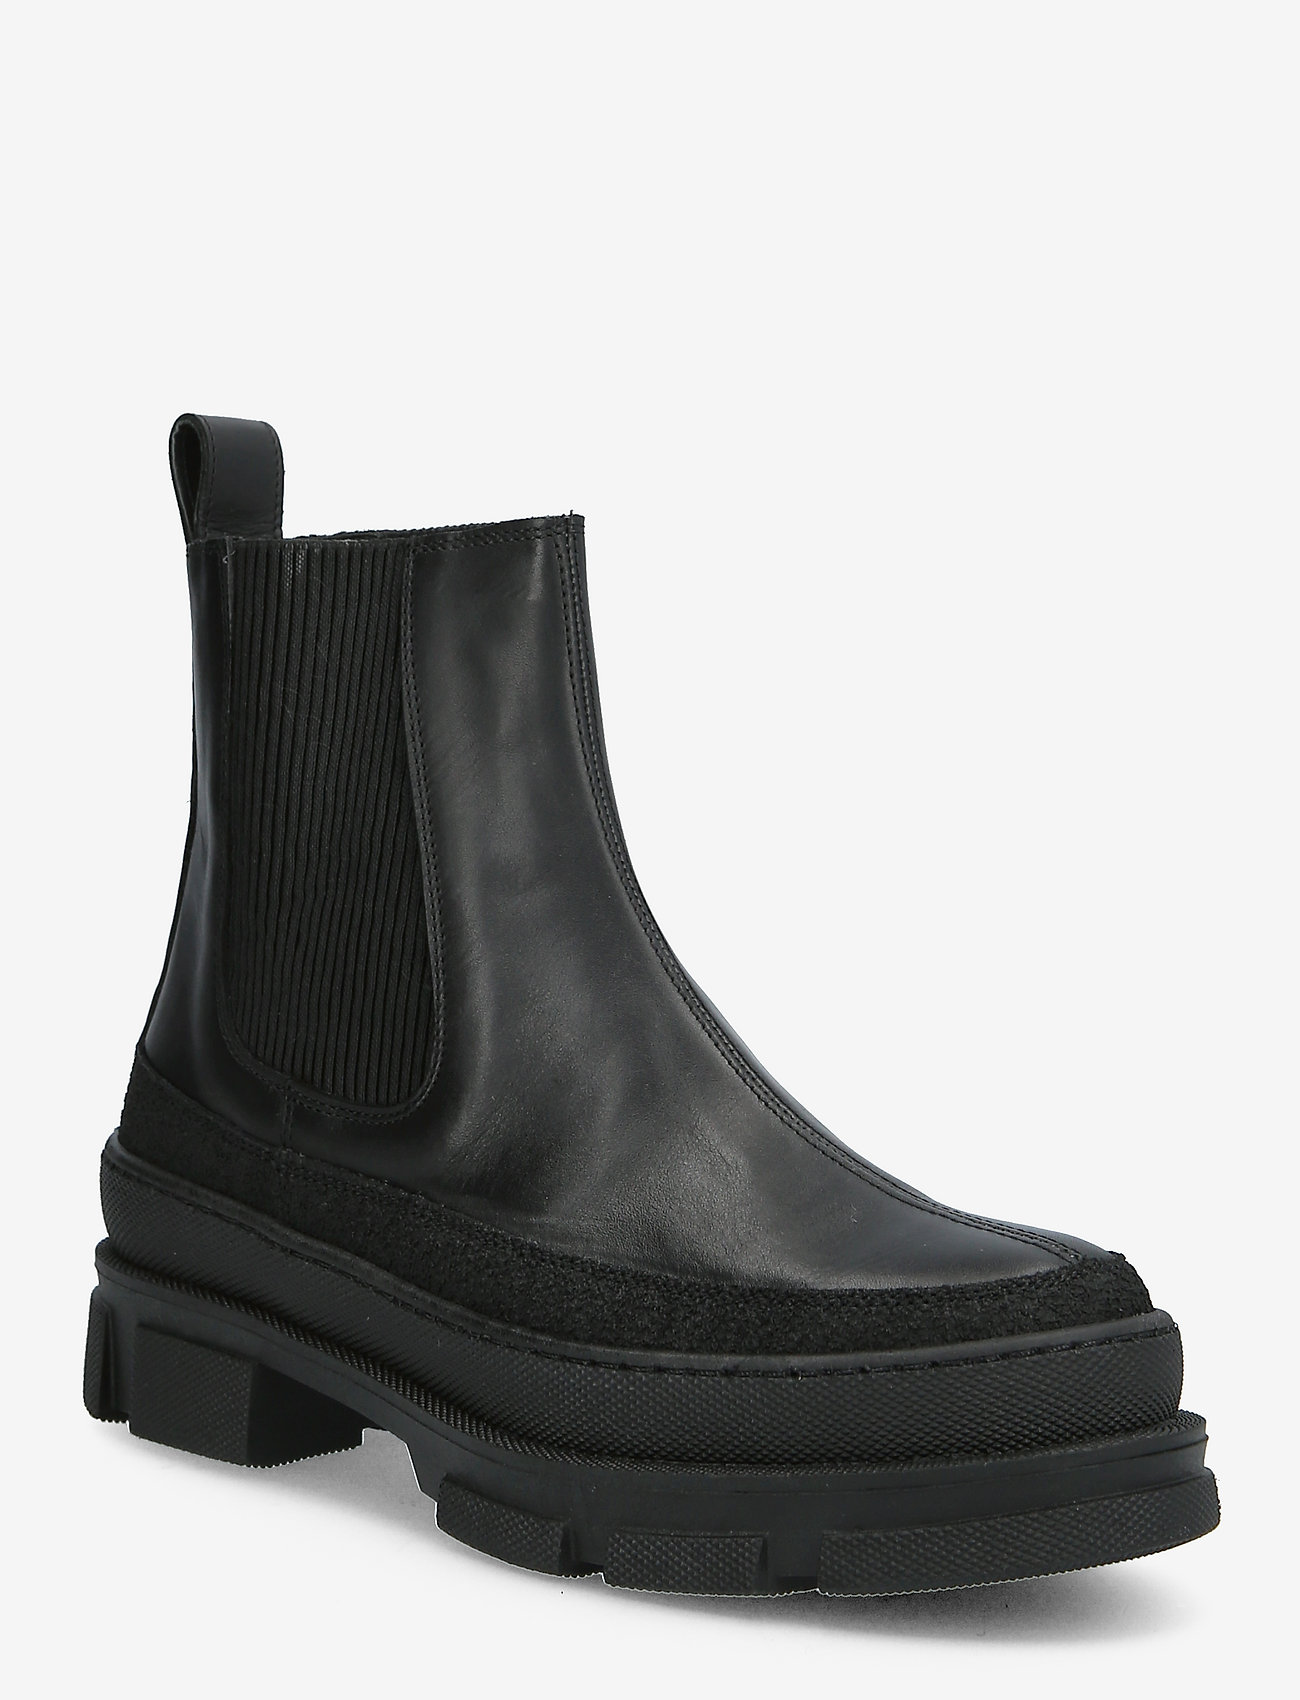 ANGULUS - Boots - flat - chelsea boots - 1321/1605/019 black/black/blac - 0